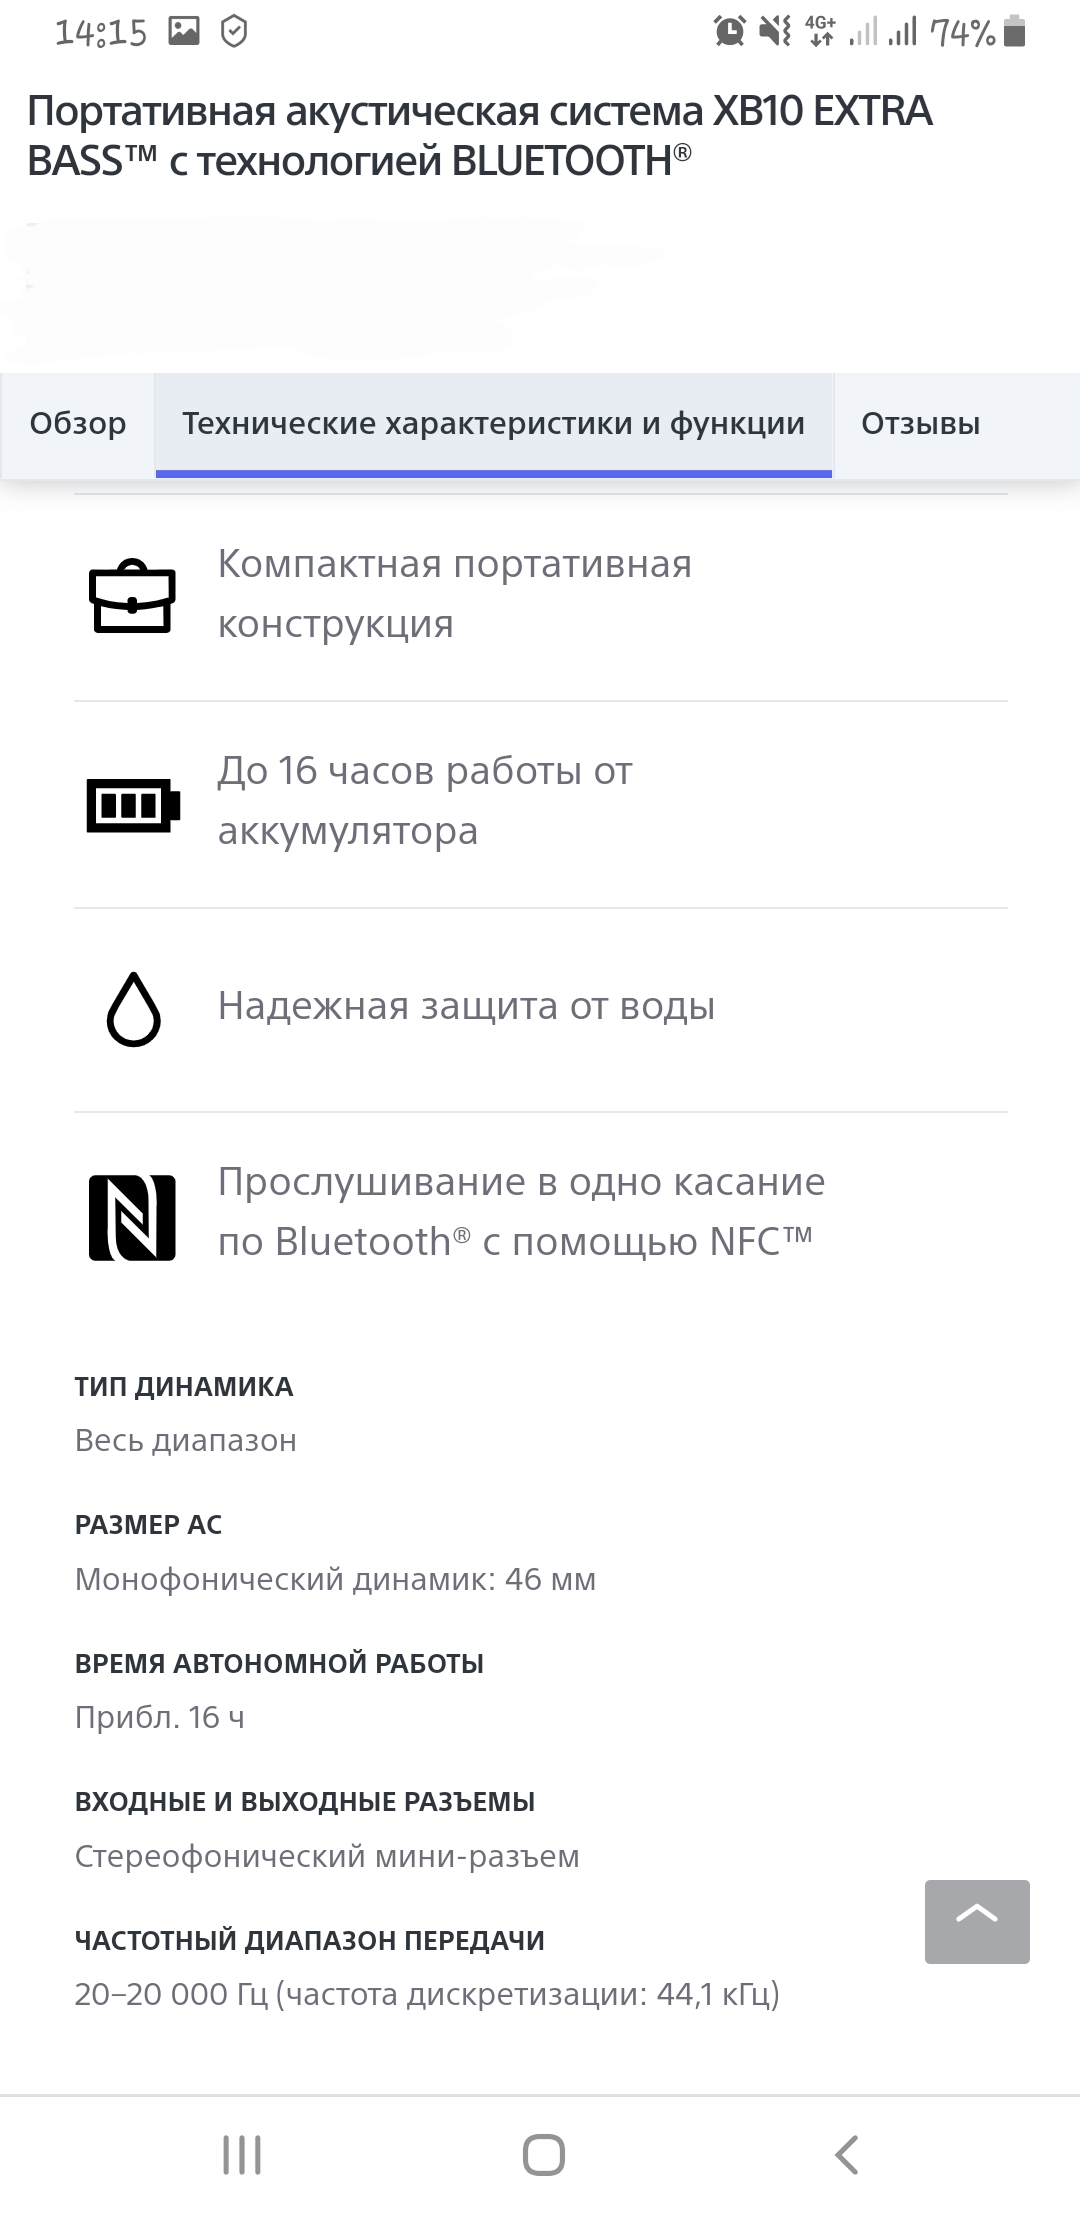 Саяногорск Инфо - screenshot_20210111-141611_chrome.jpg, Скачано: 100